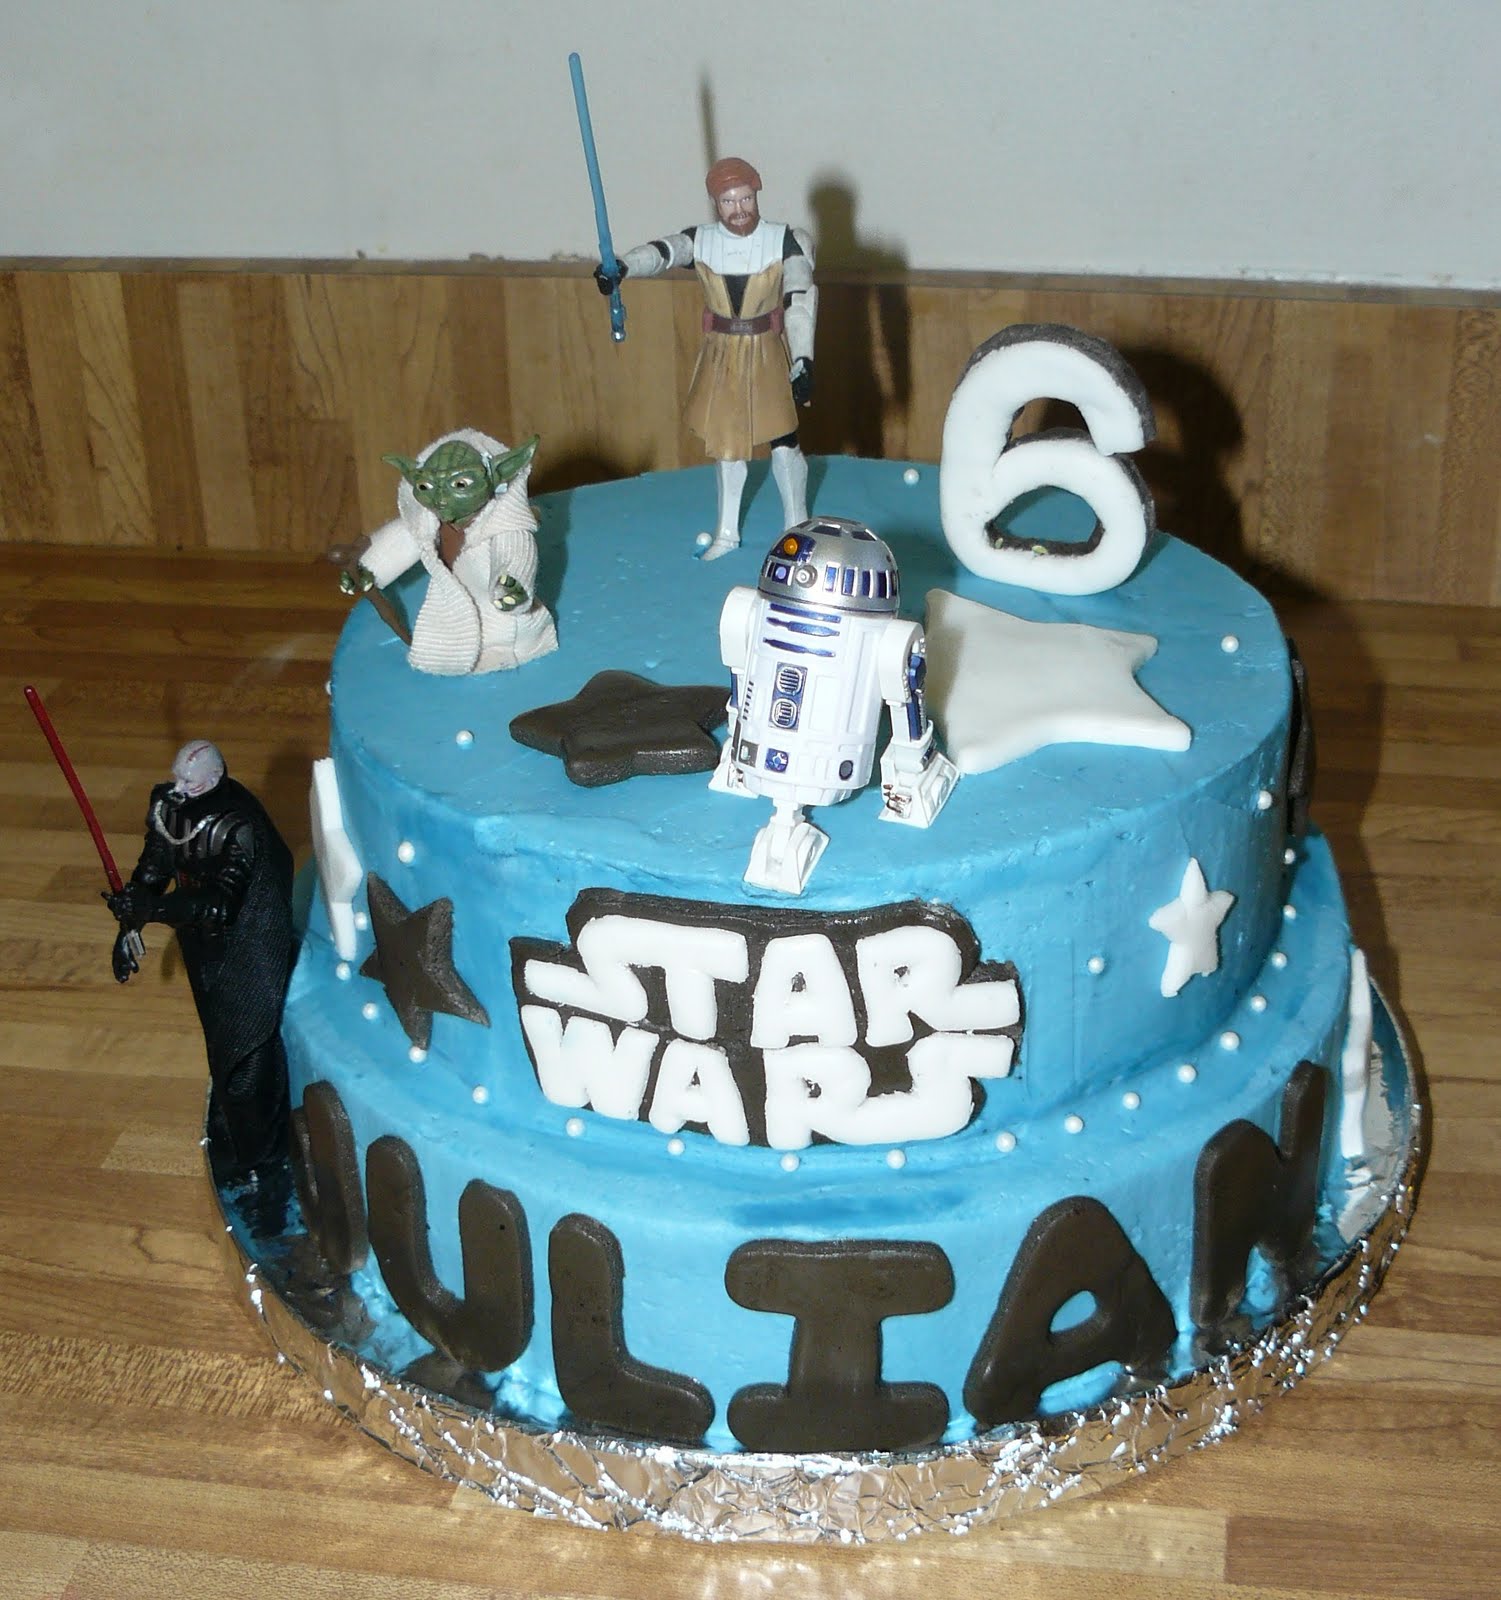 Keepsake Cakes and Pastries: Star Wars Cake